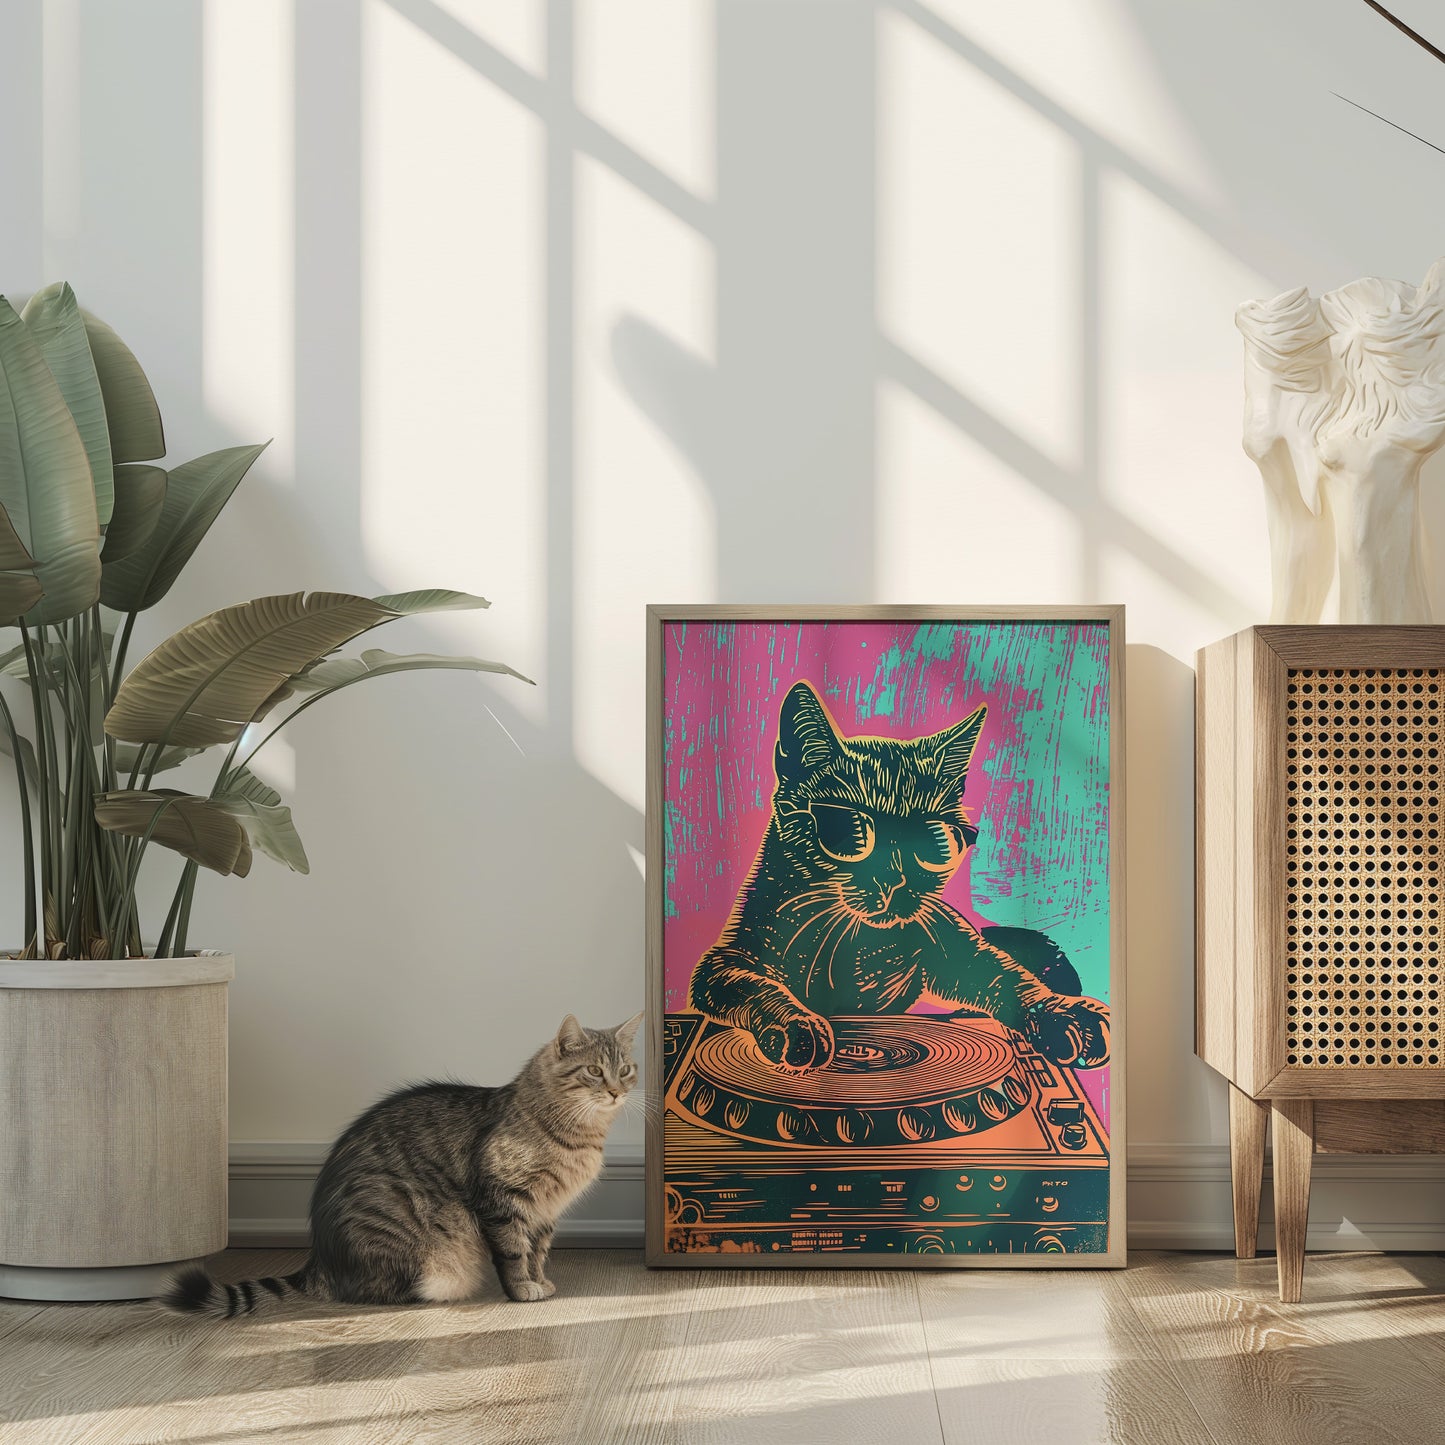 A cat sitting beside an artwork featuring a stylized cat DJing.